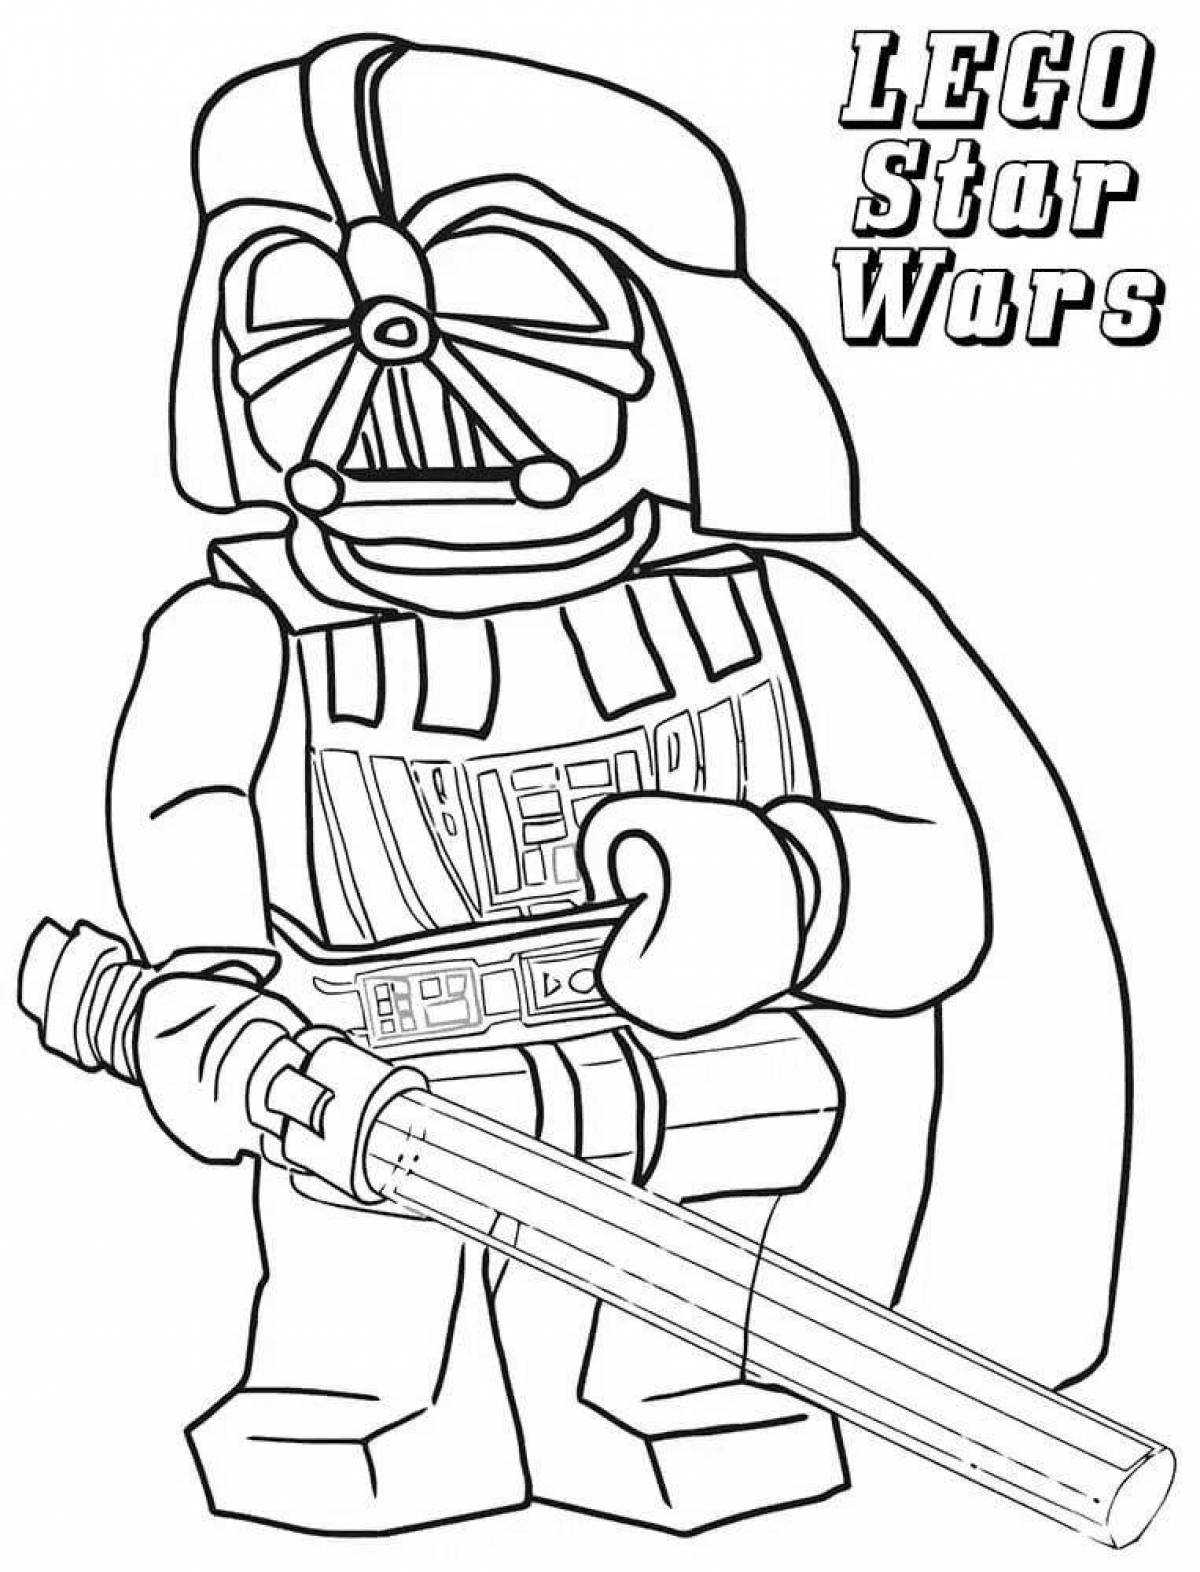 Impressive lego star wars coloring book